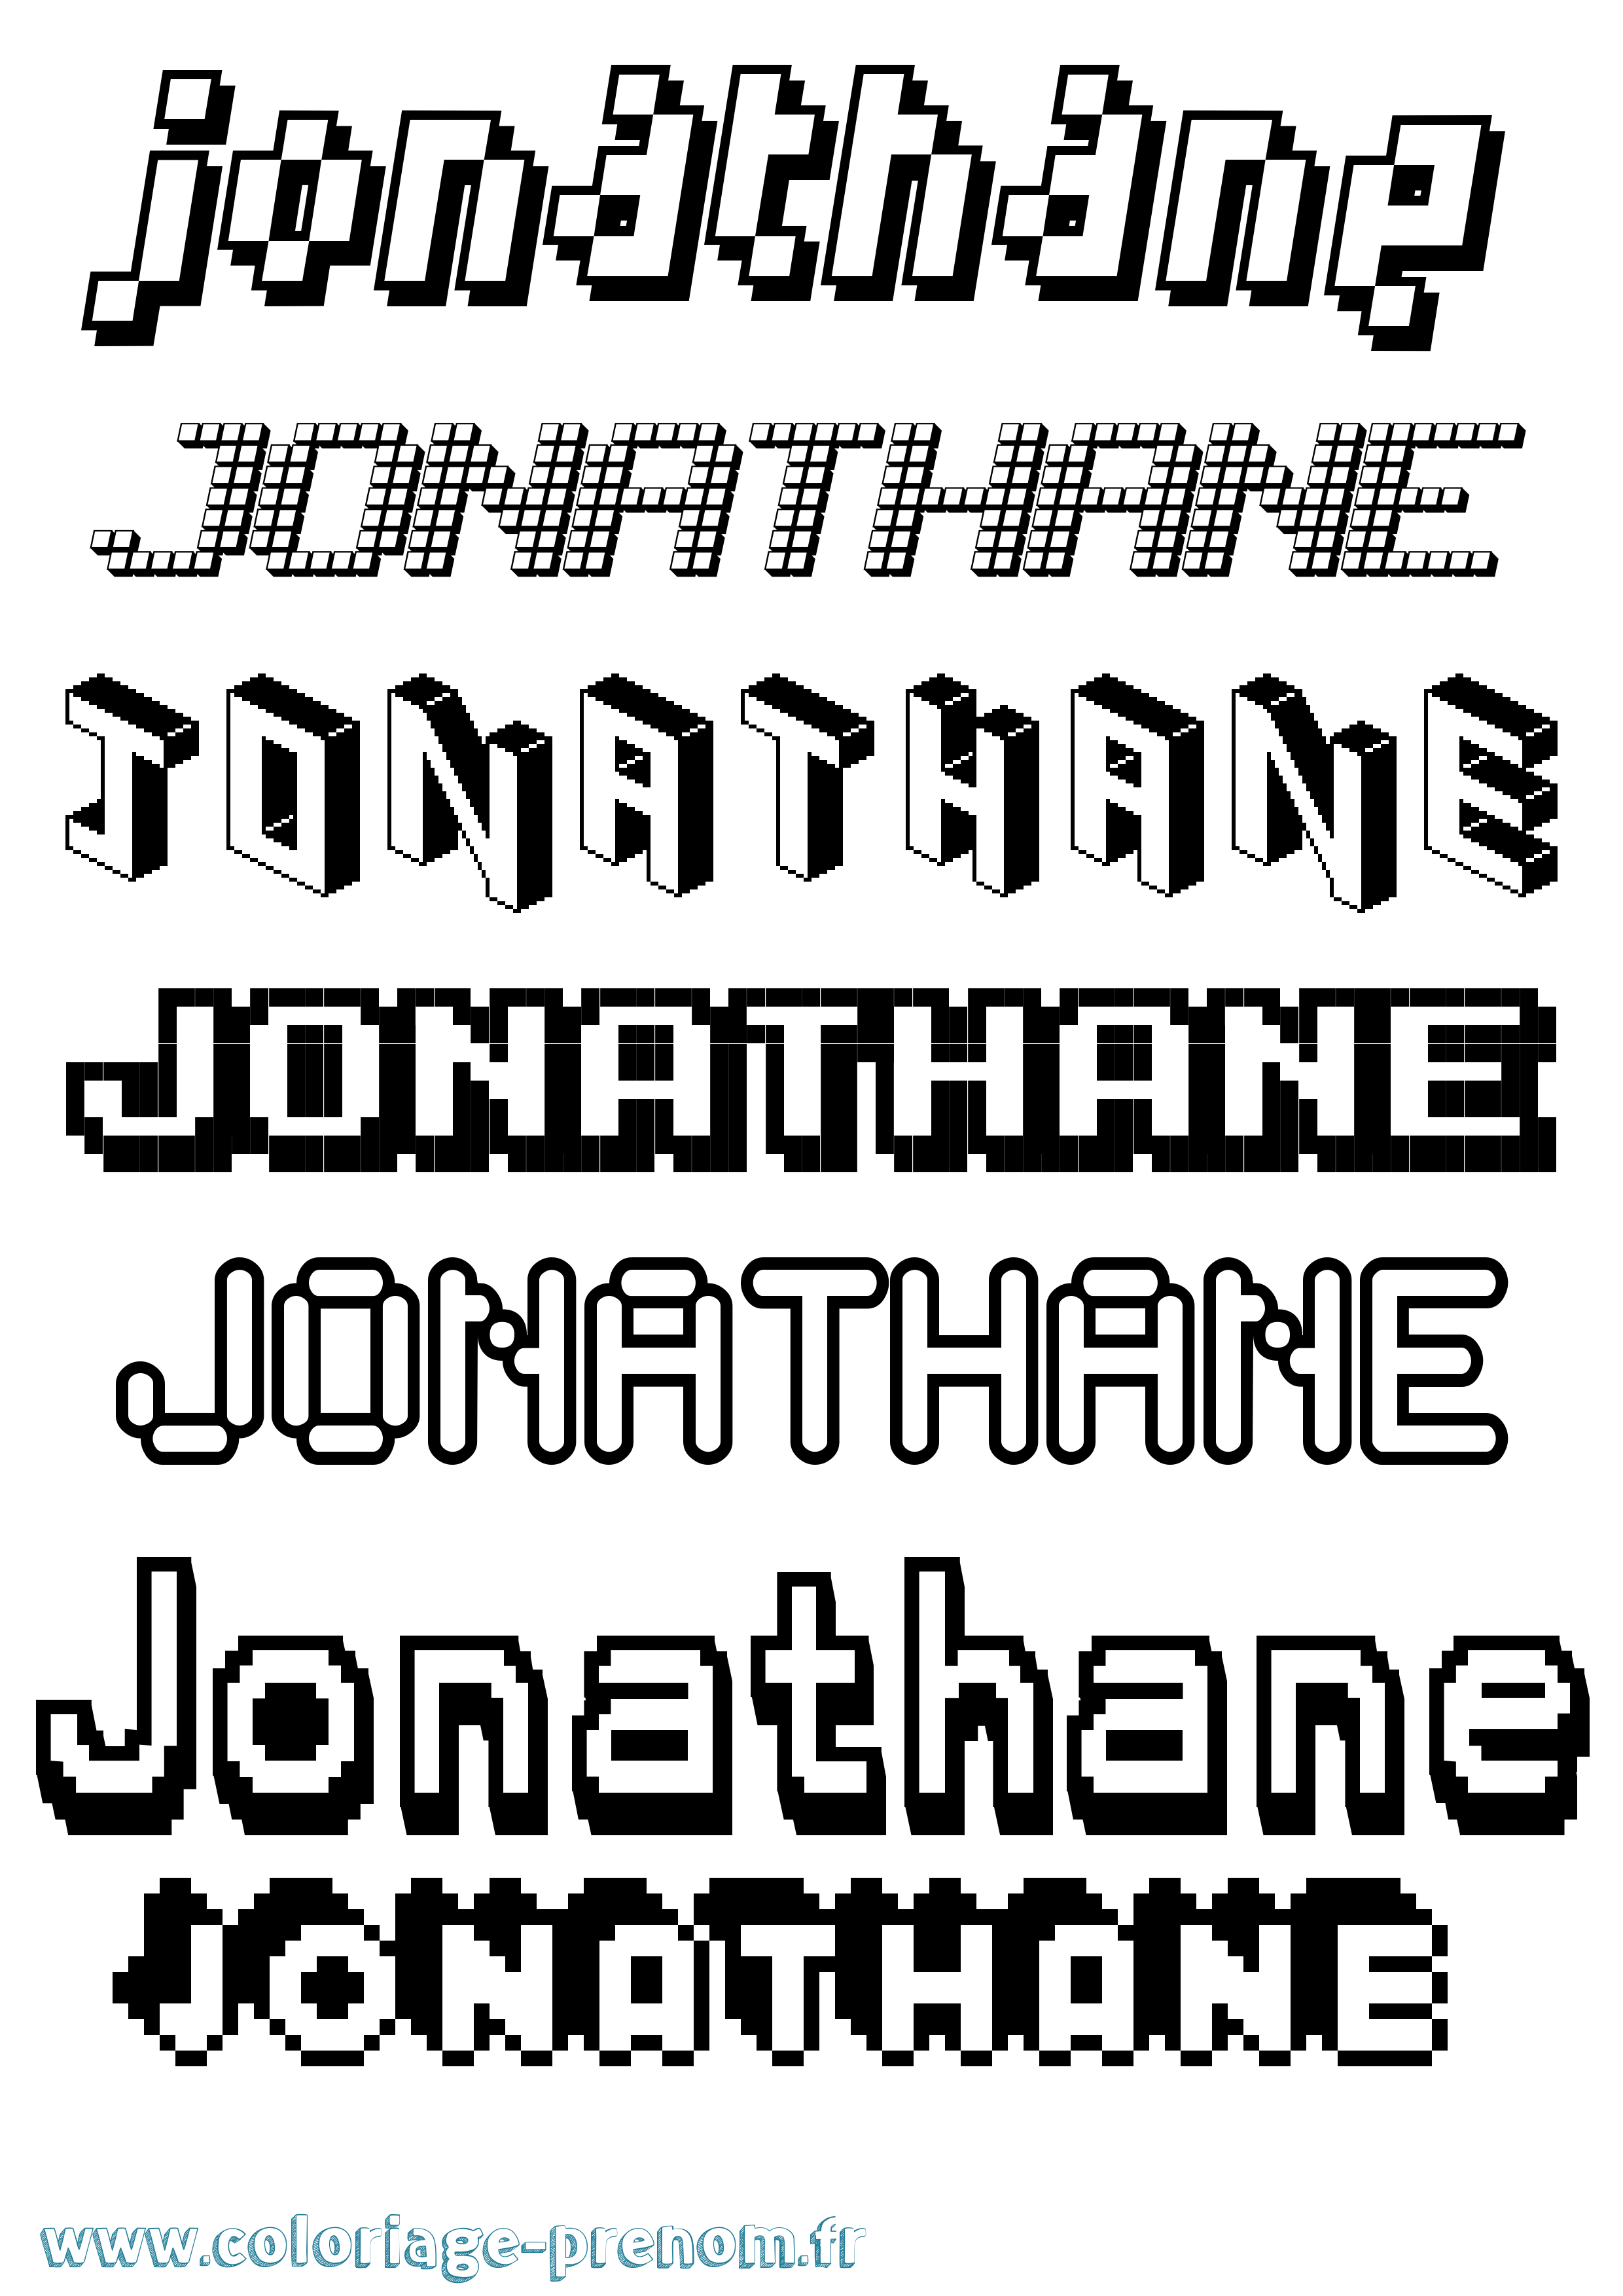 Coloriage prénom Jonathane Pixel